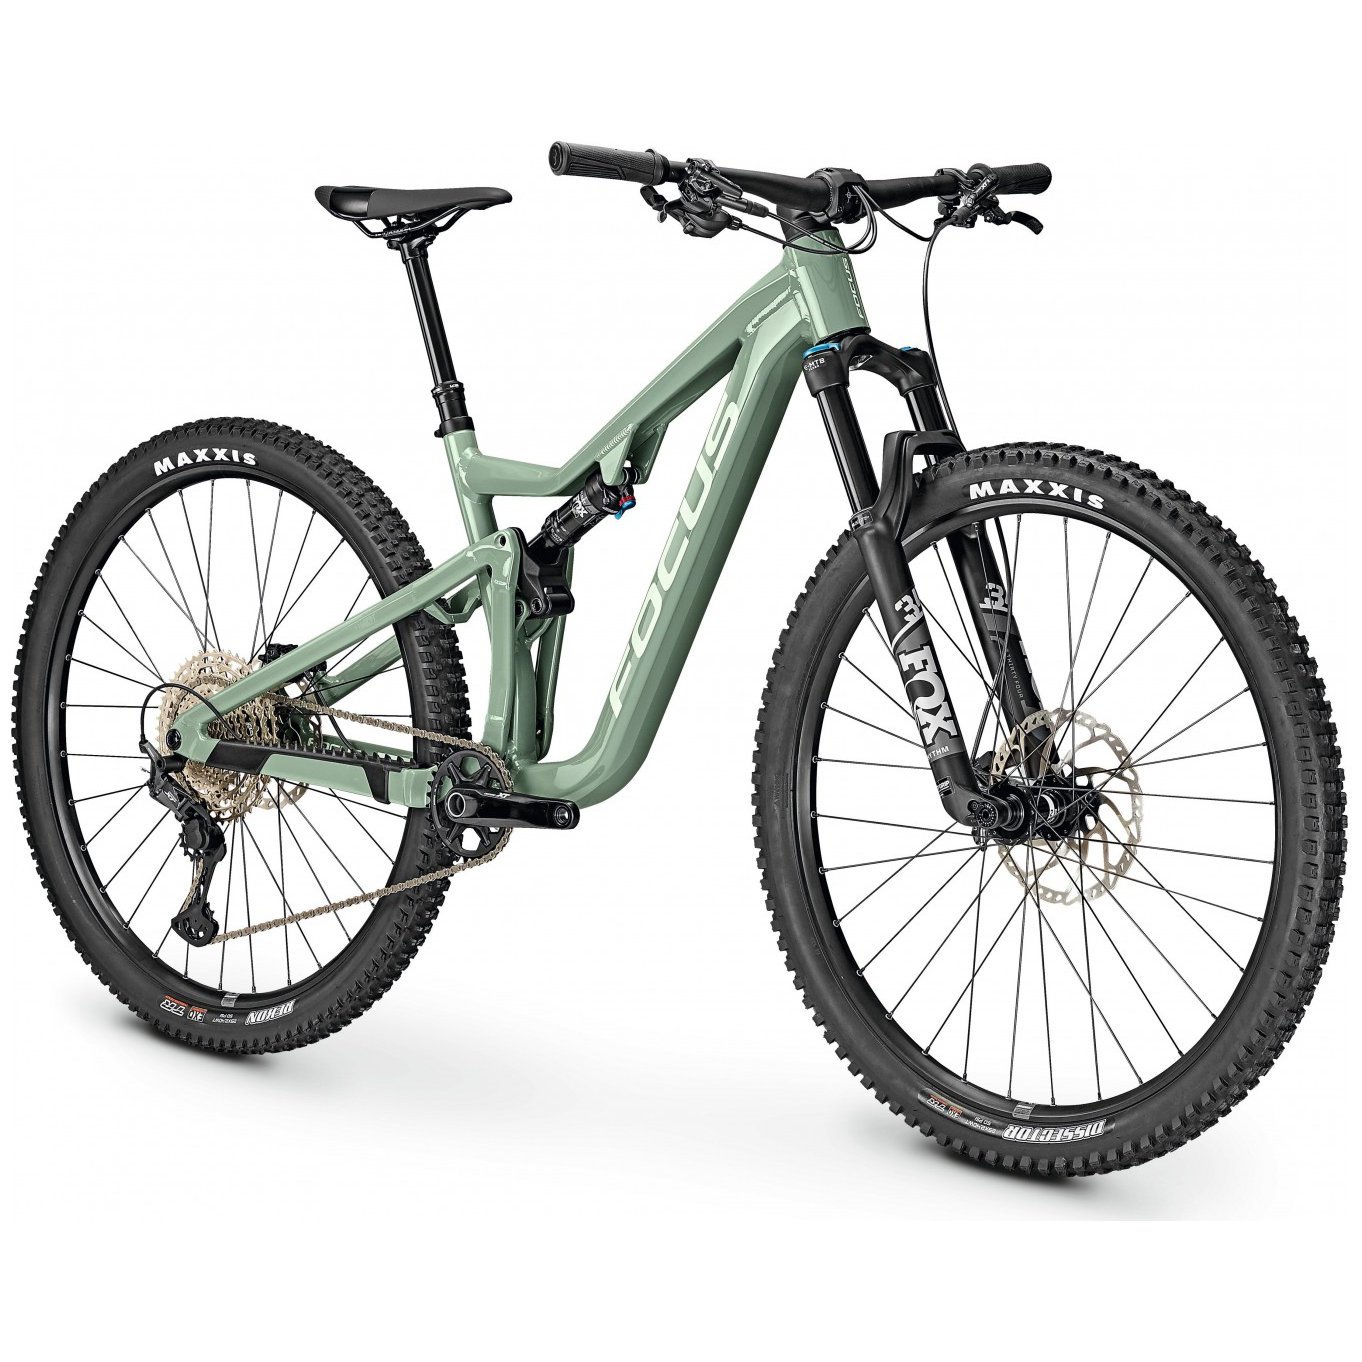 thron-69-trail-bike-focus-mineral-grey